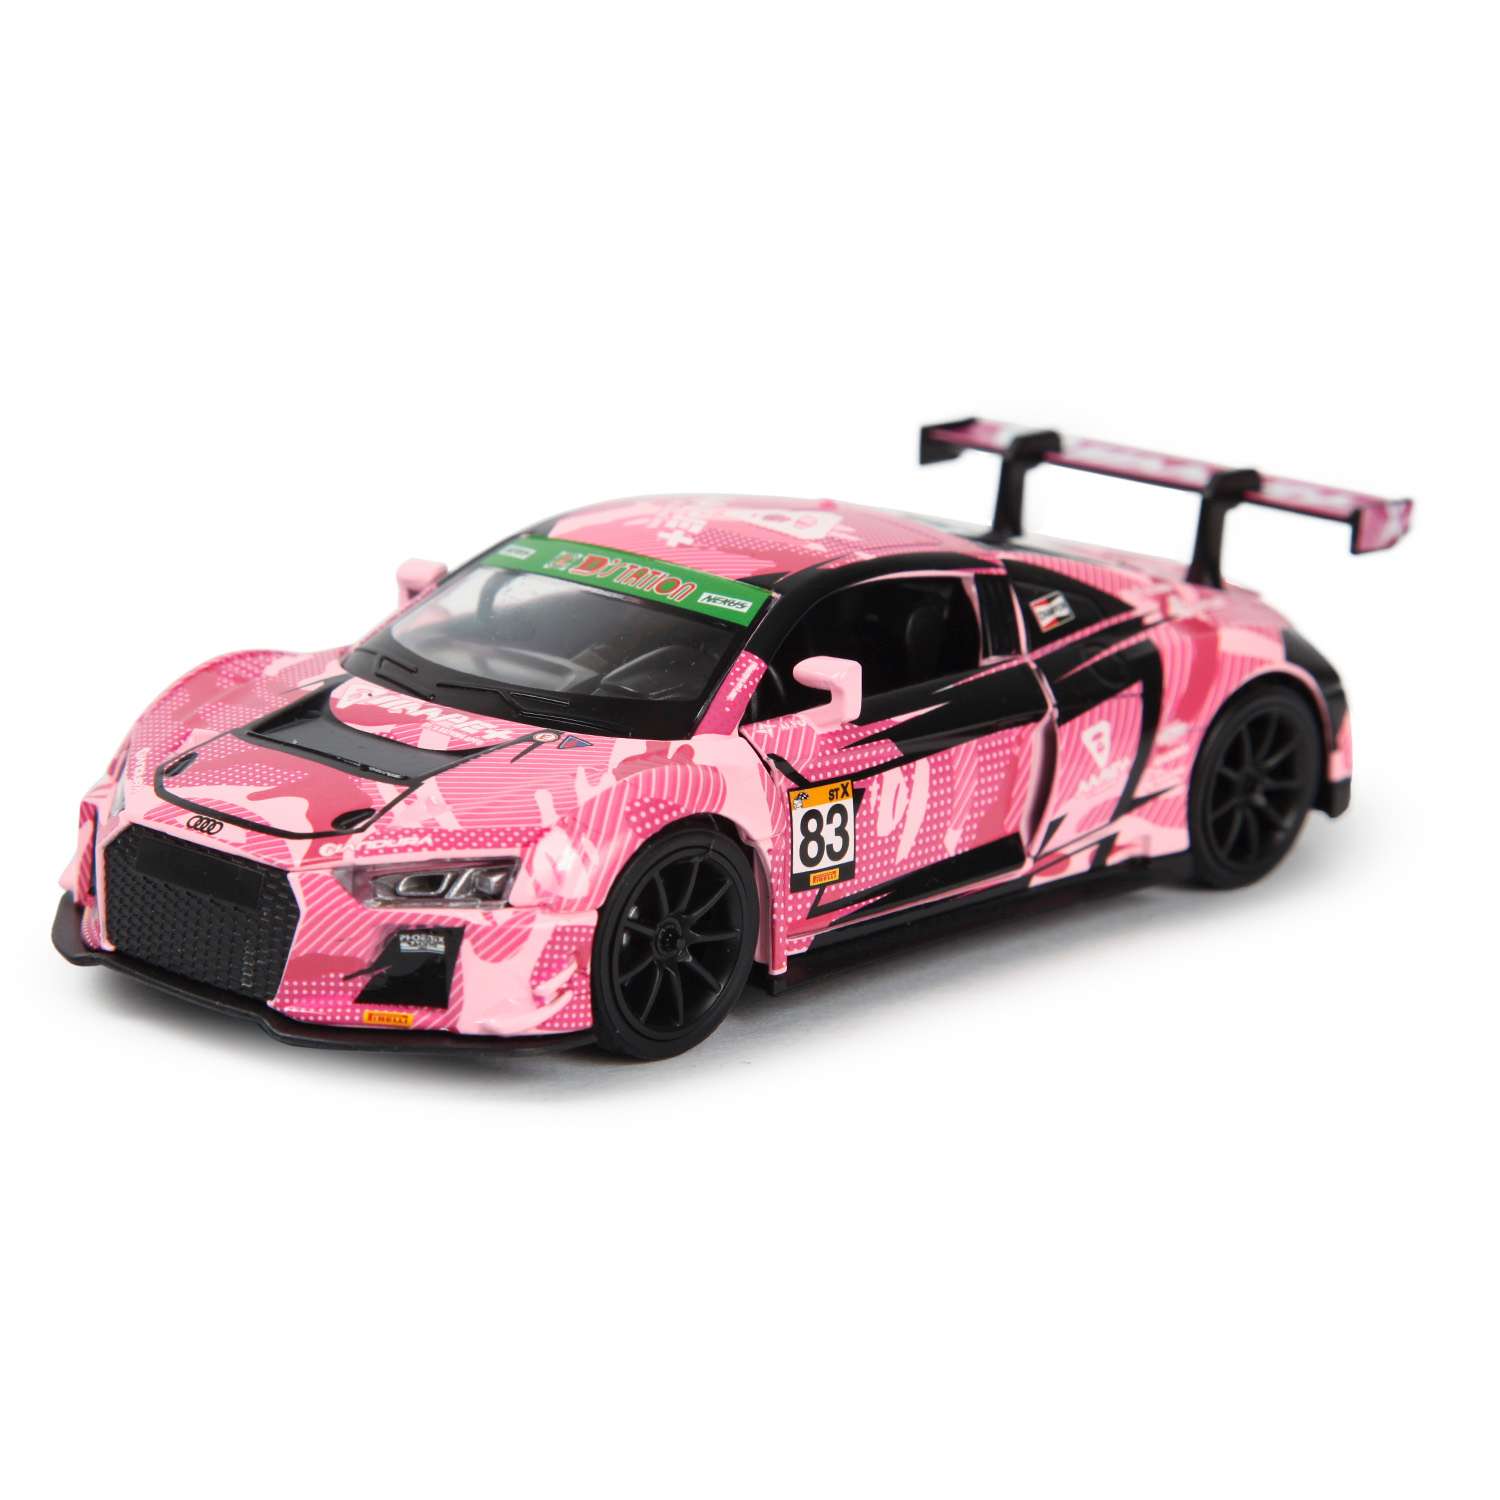 Машинка Mobicaro 1:32 Audi Macau Grand Prix 2020 Evisu Pink DTM 664992(I) 664992(I) - фото 1